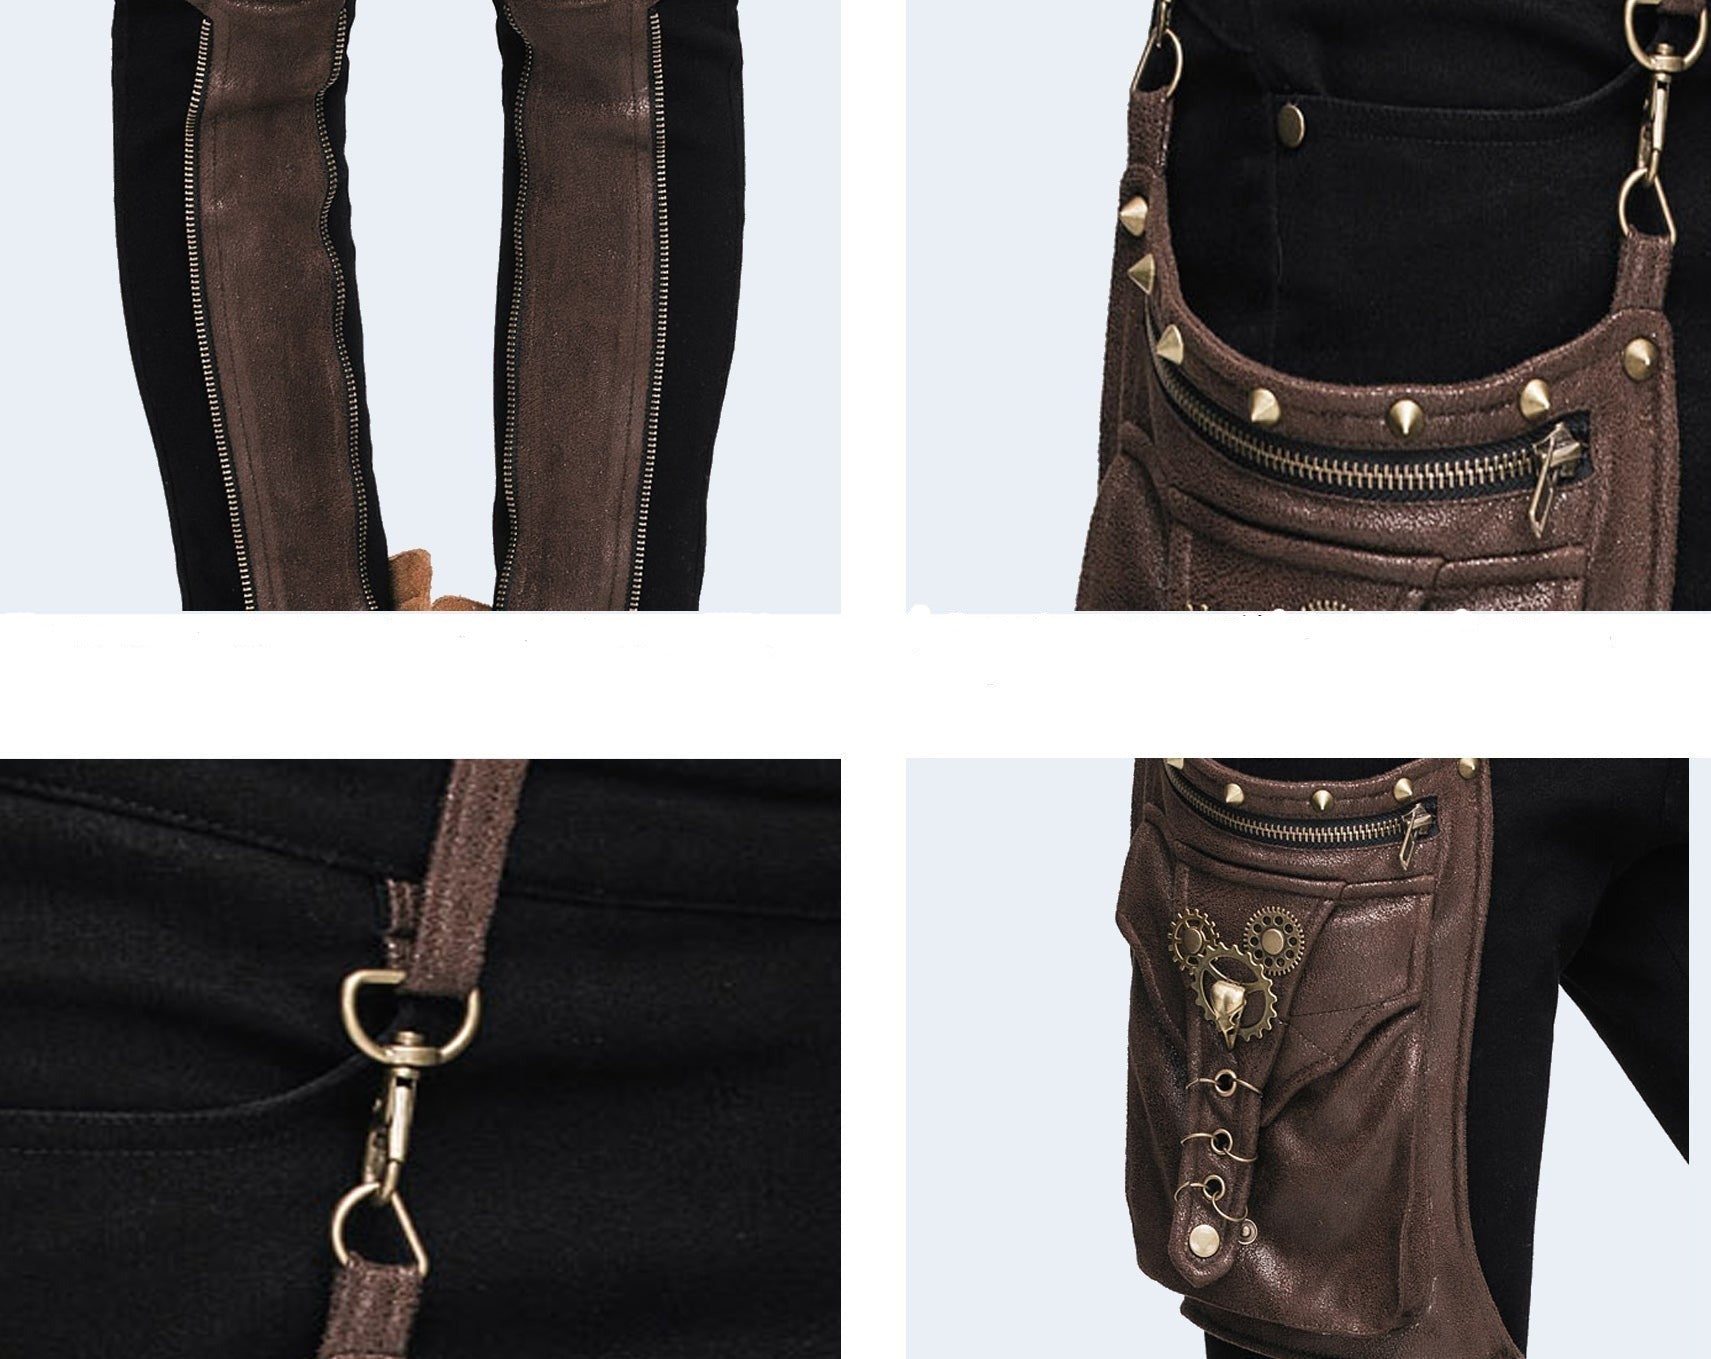 Zipped Steampunk Skinny Pants - Goth Mall